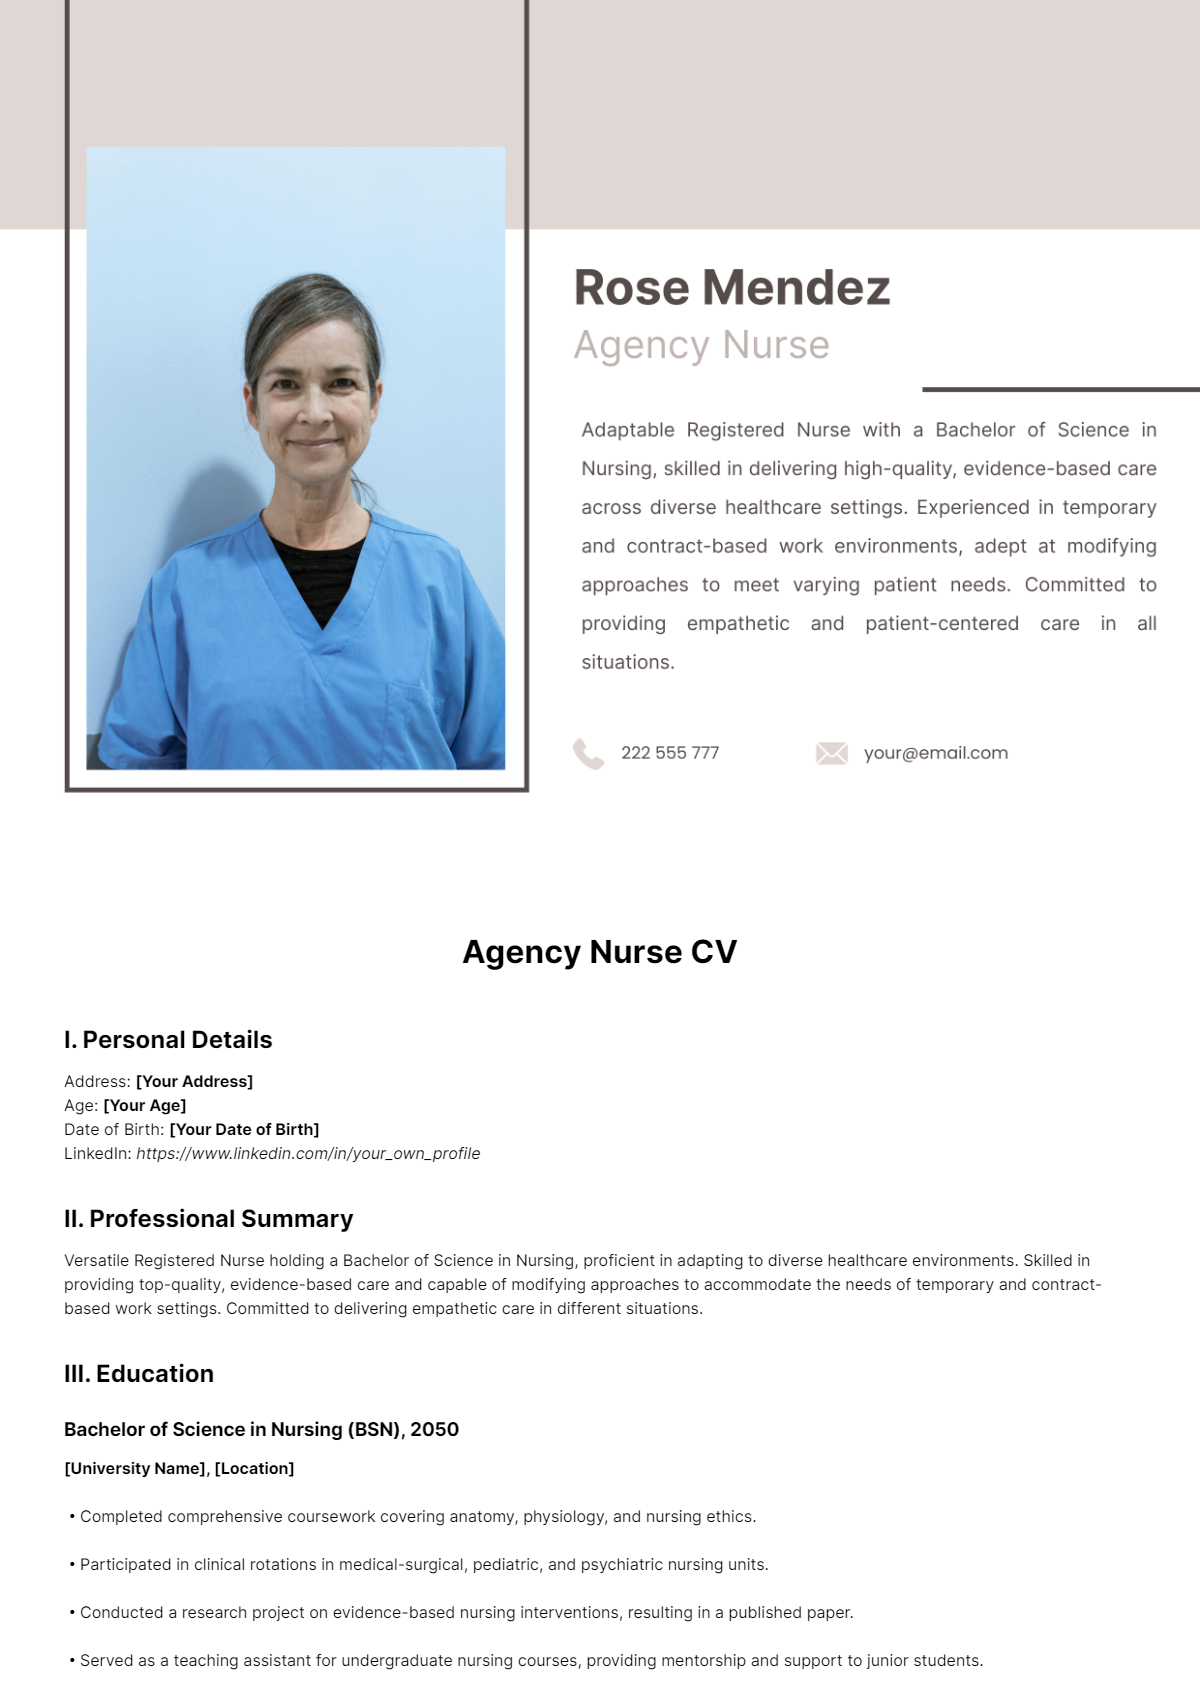 Free Agency Nurse CV Template